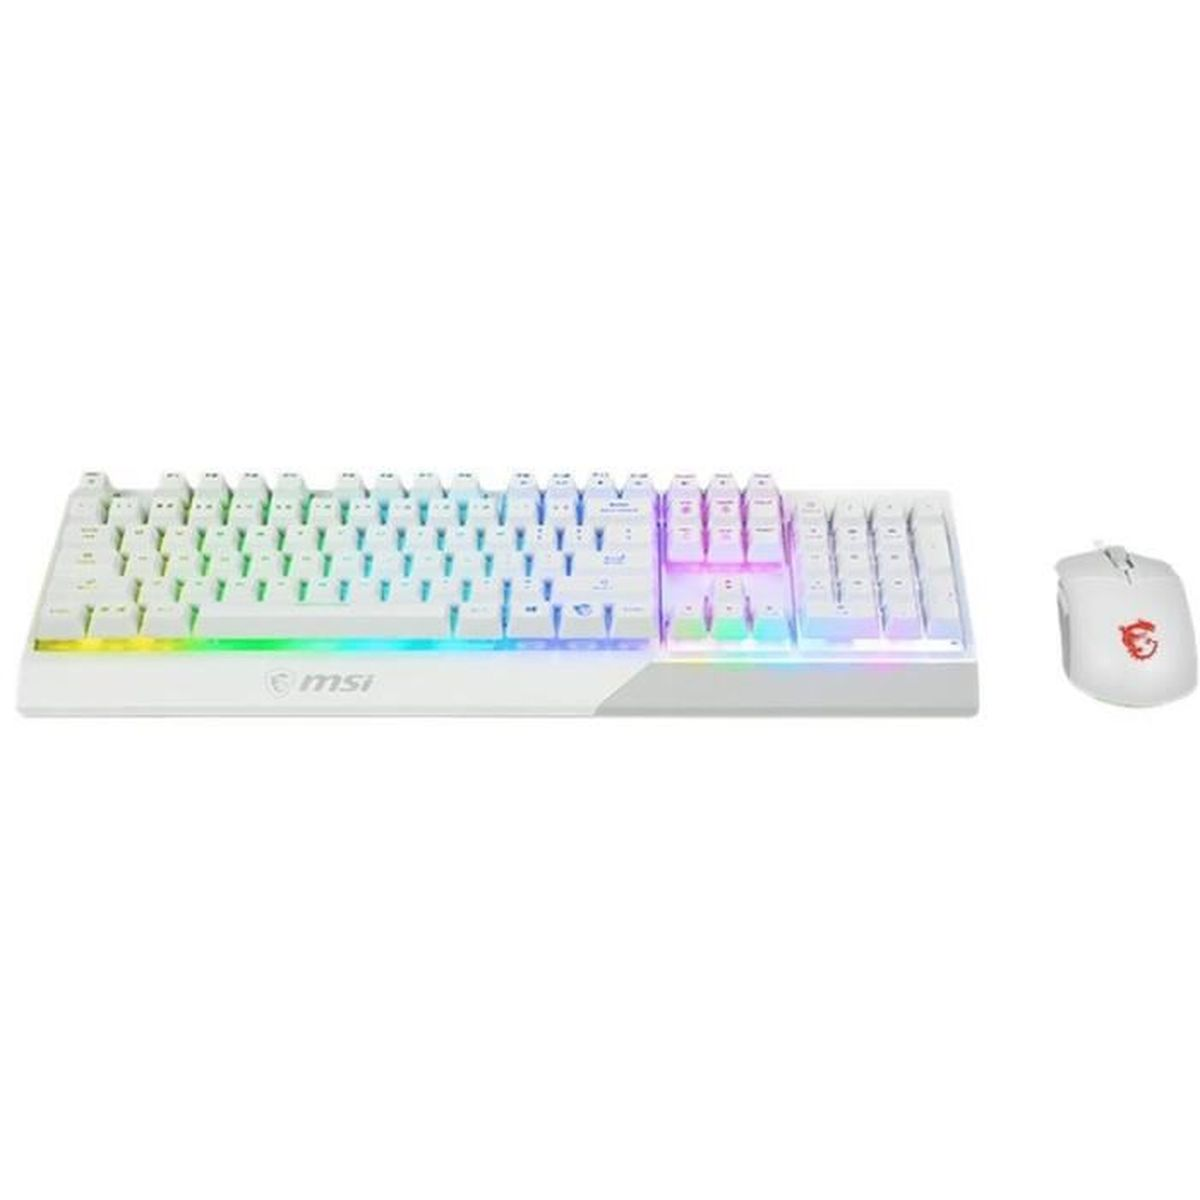 Vigor MSI Combo, GK30 Weiß Tastatur-Maus-Set,